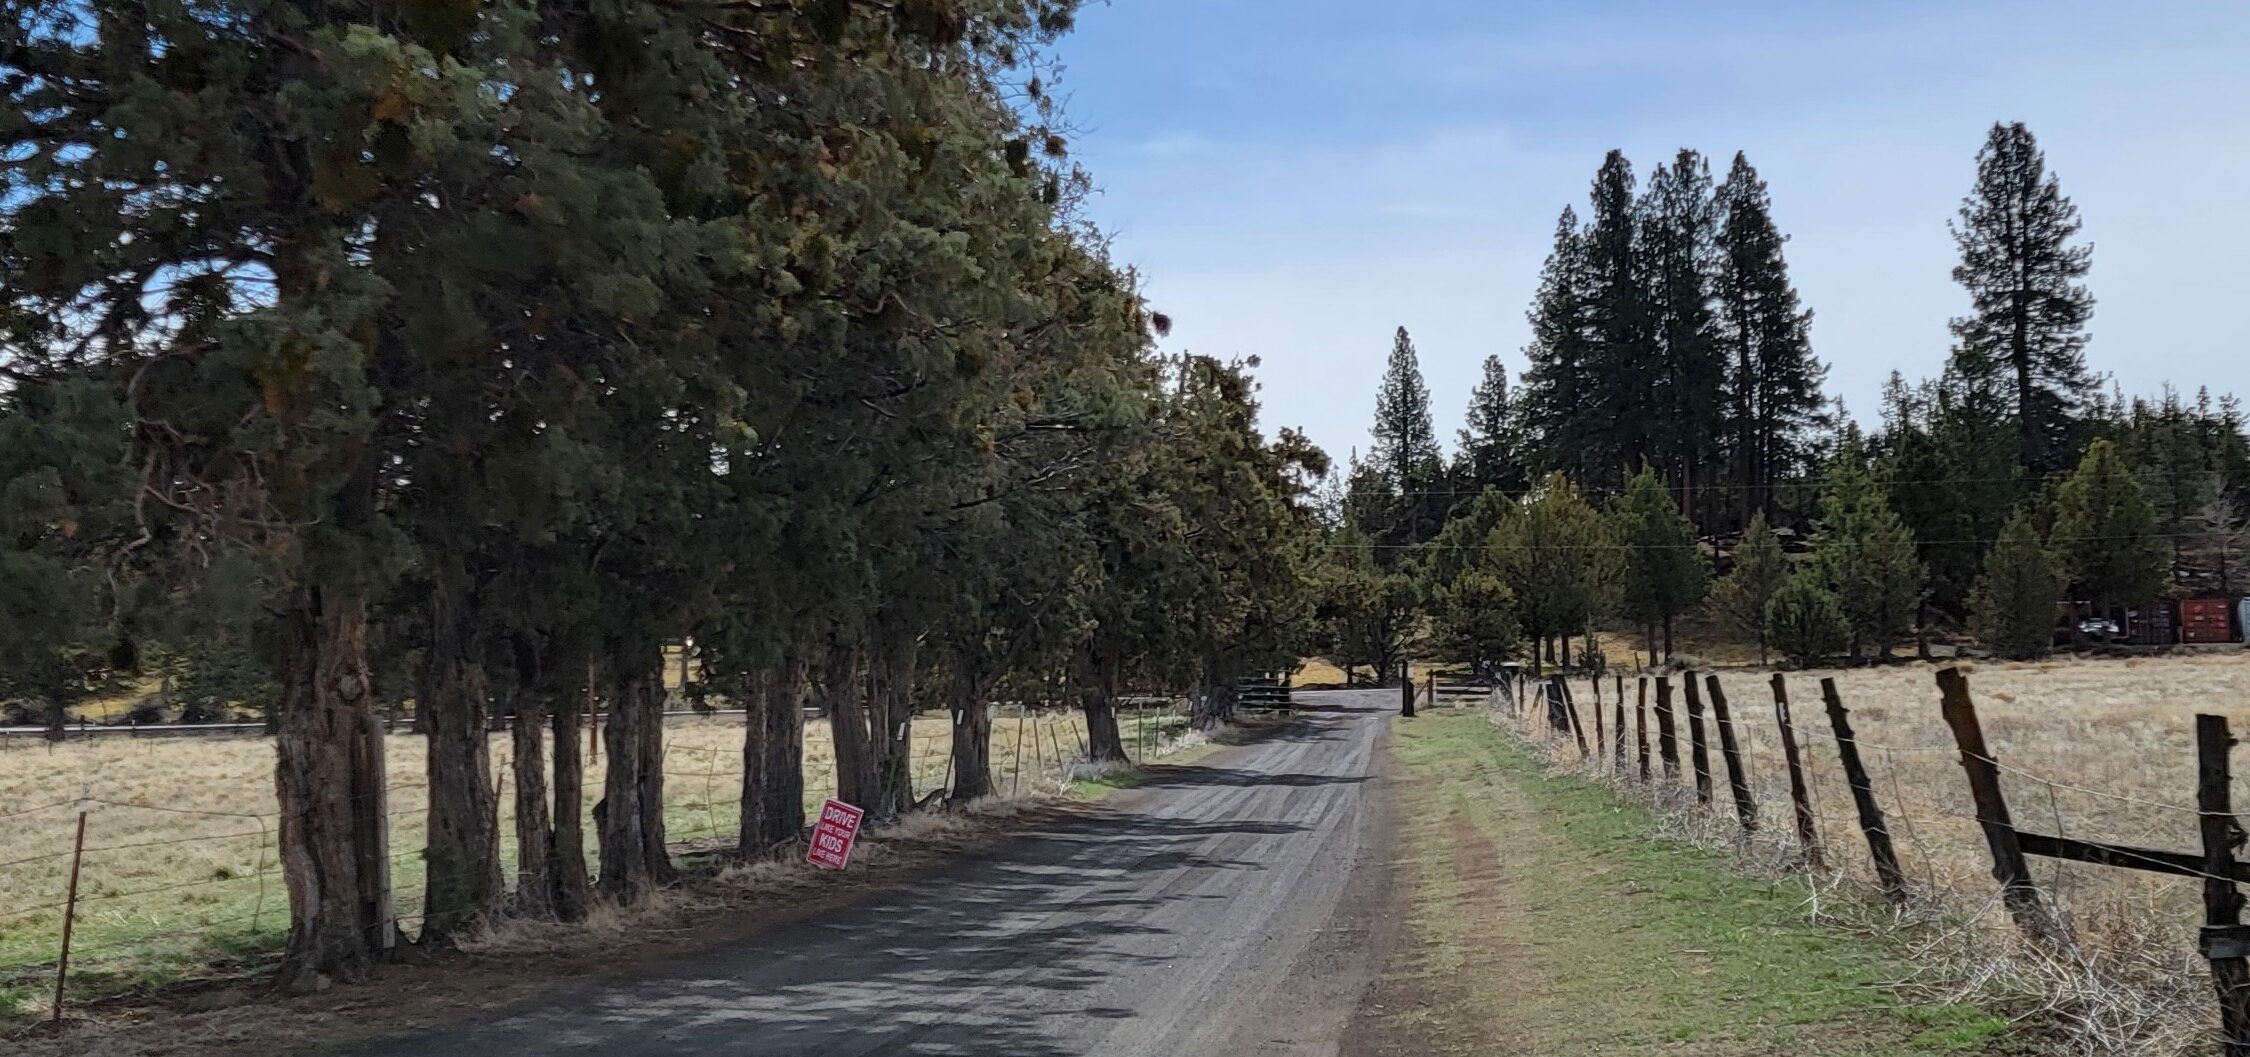 a gravel road leading to Tillicum Park